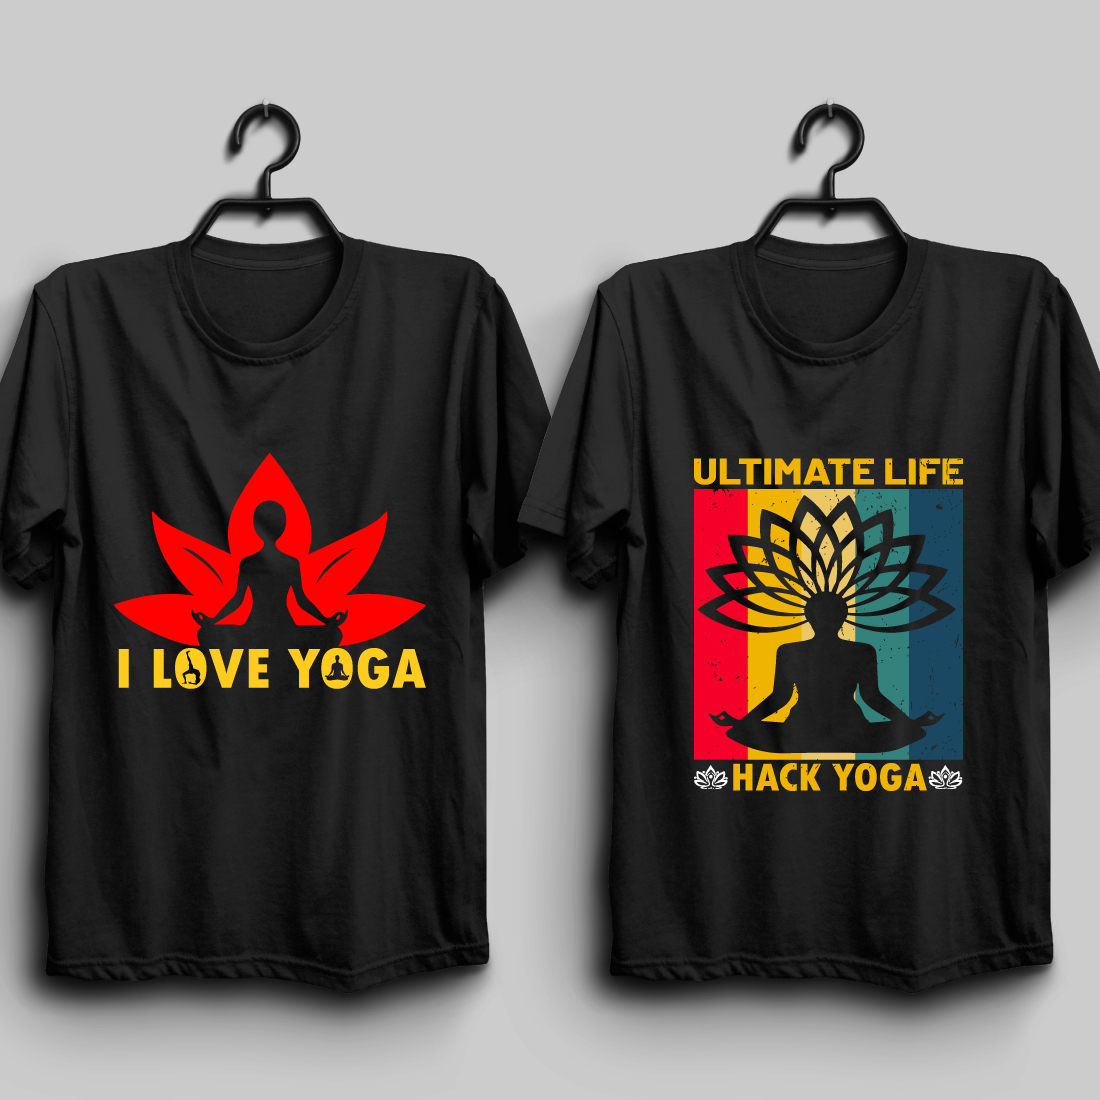 Yoga T shirt Design Bundle